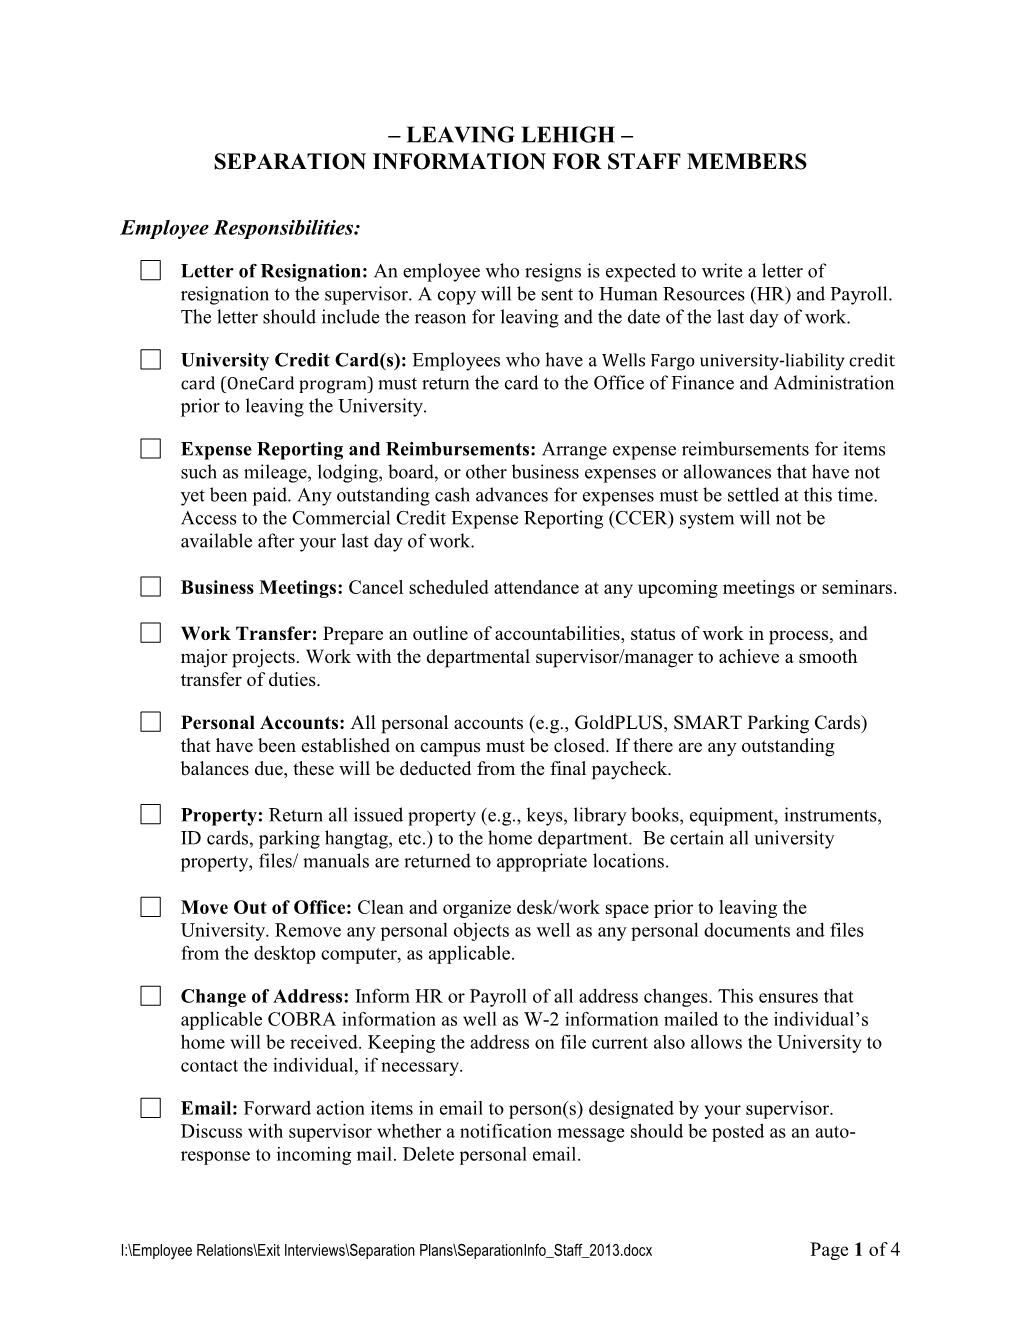 Resignation/Termination Checklist